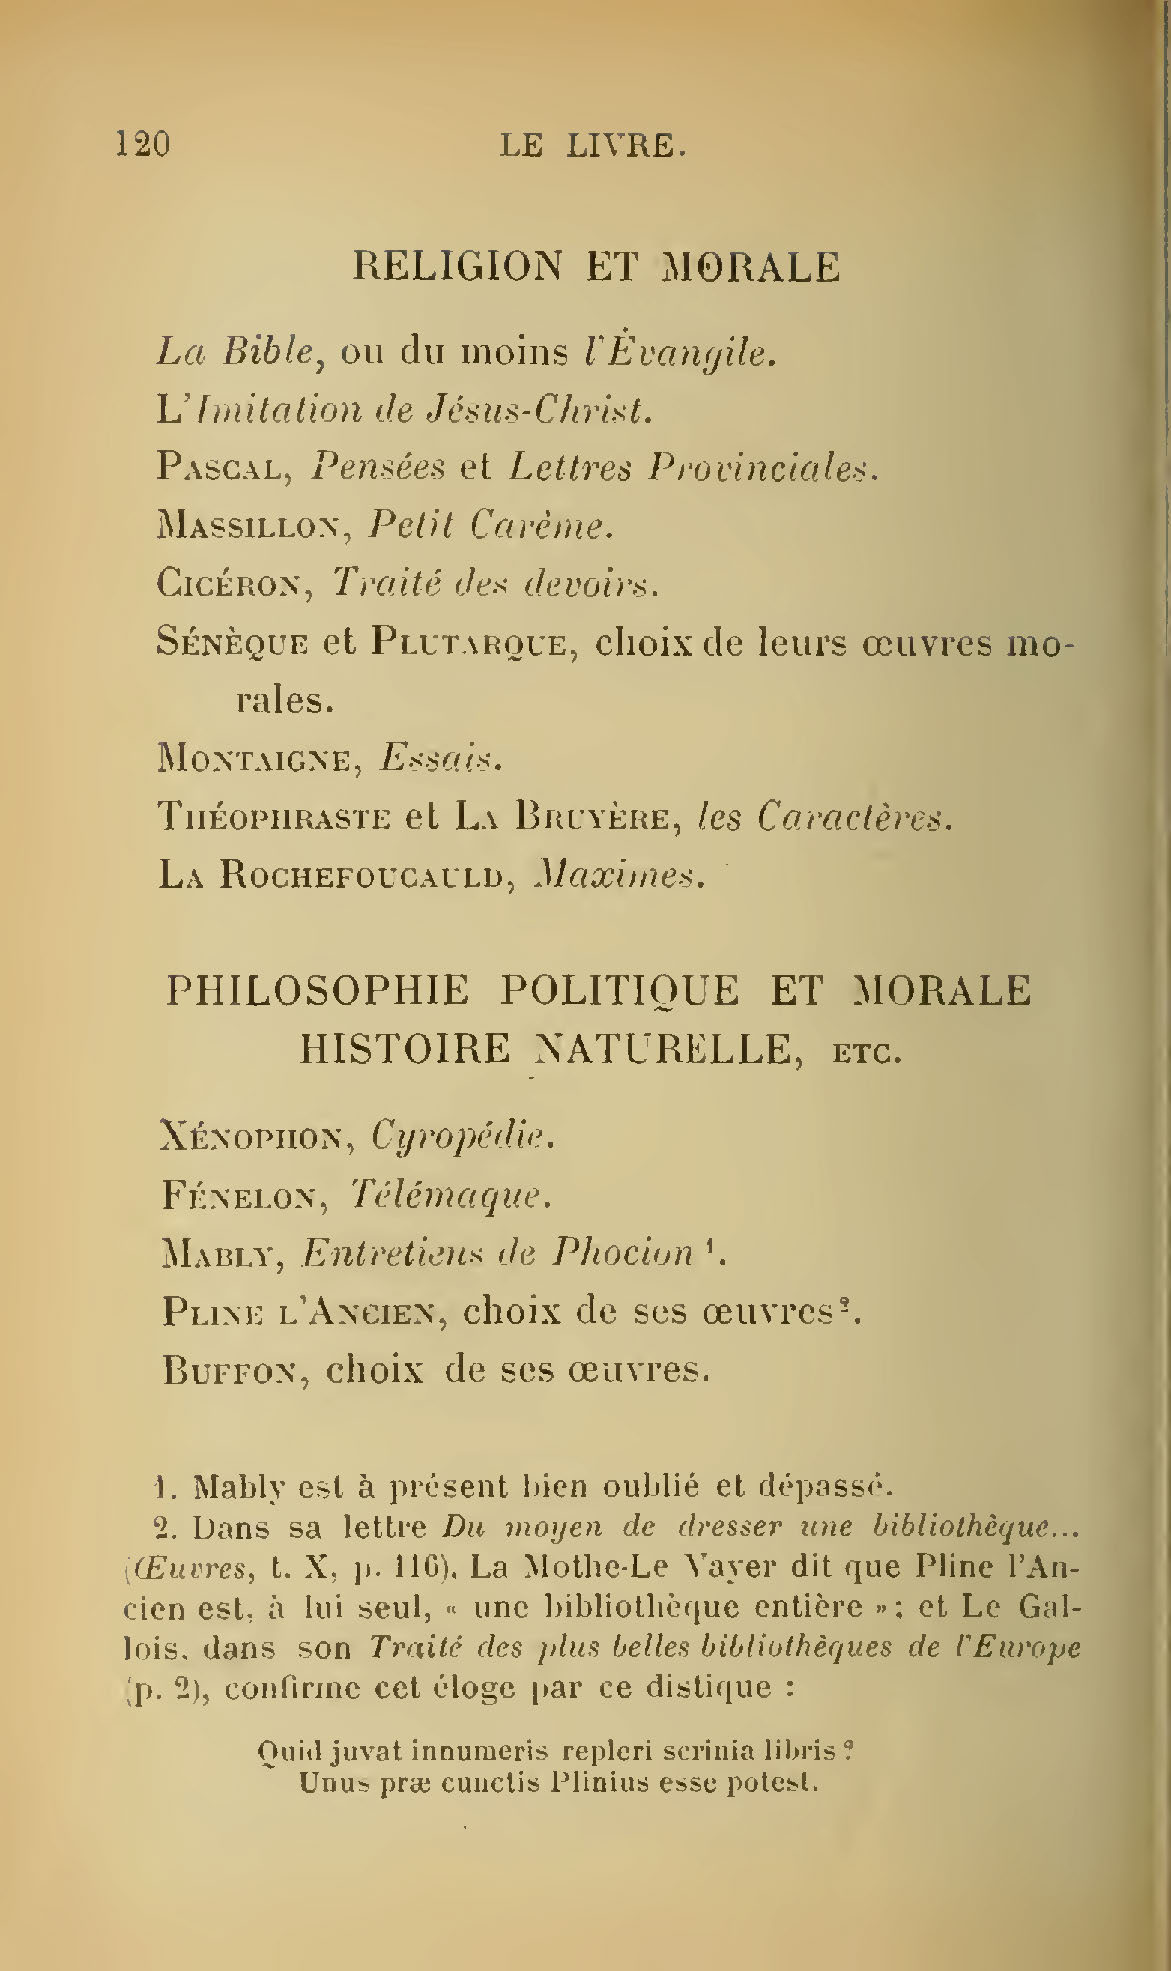 Albert Cim, Le Livre, t. II, p. 120.